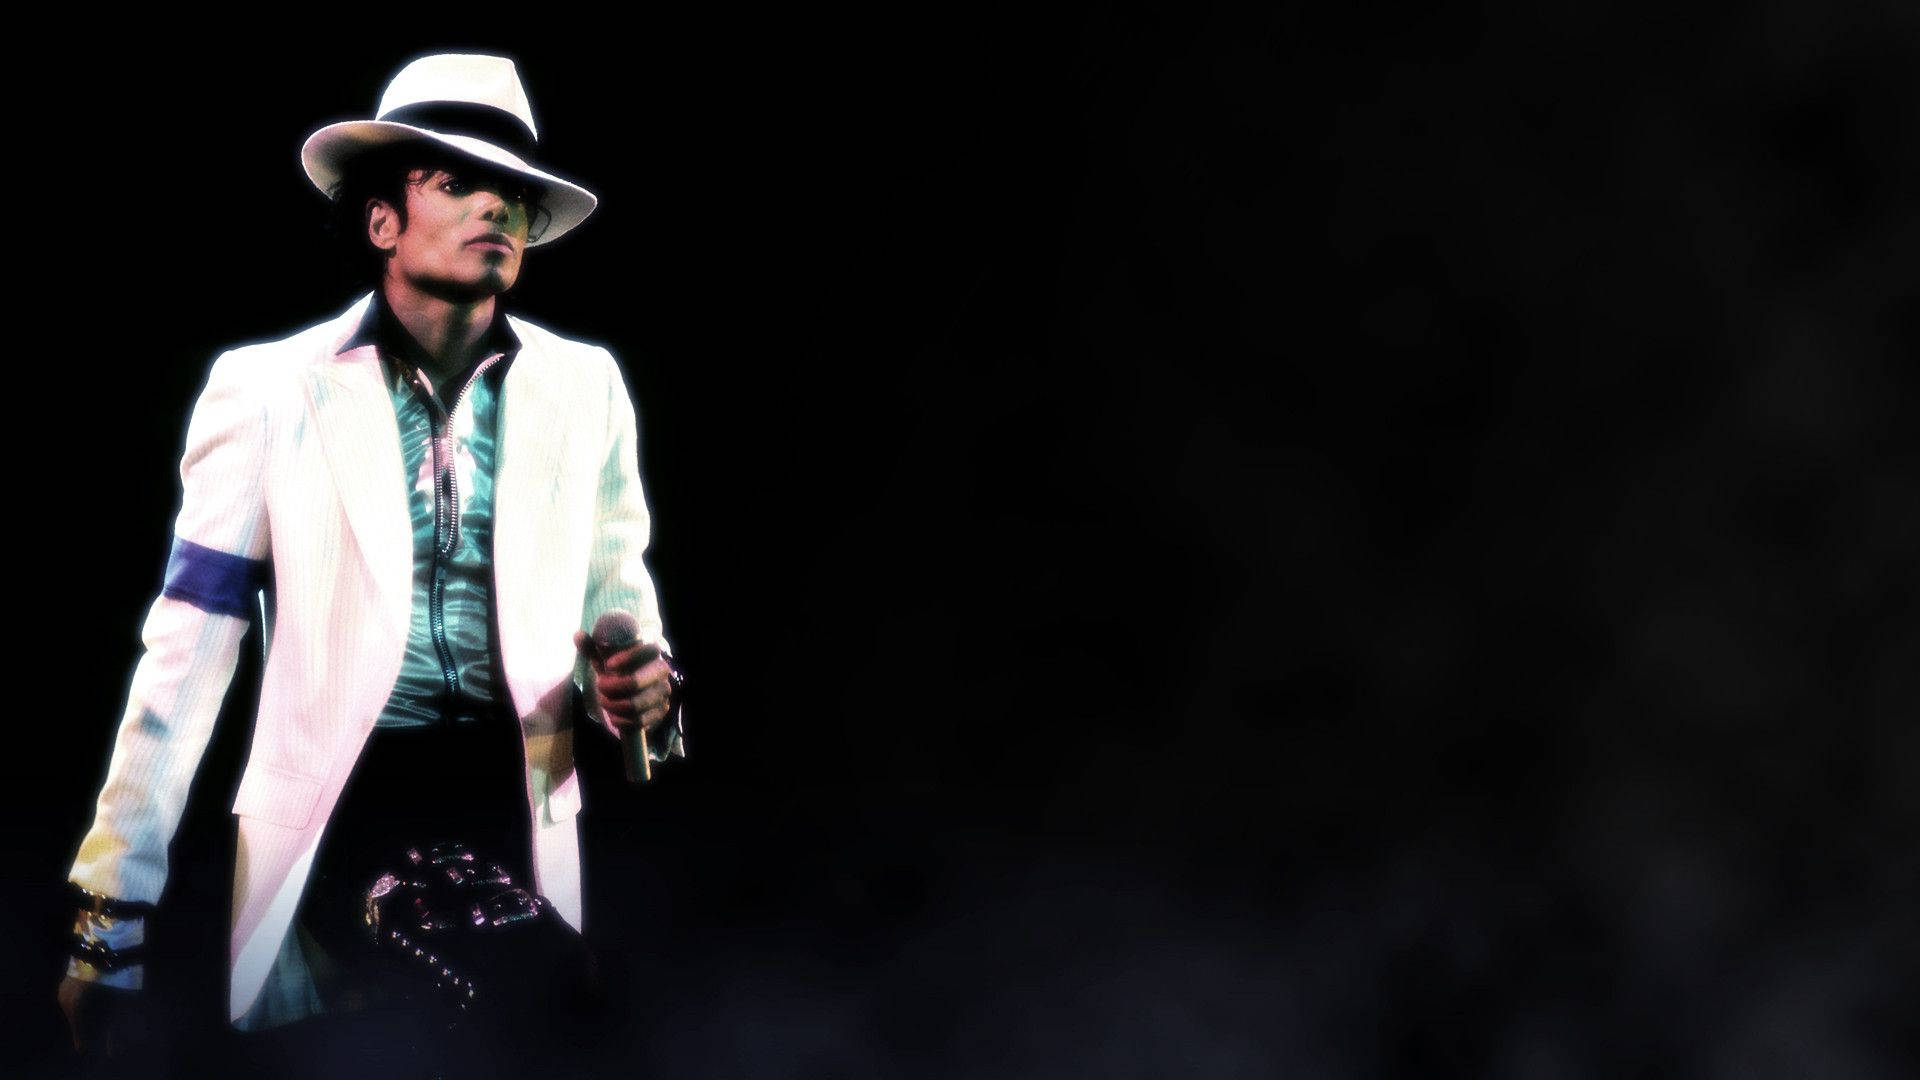 Michael Jackson In White Suit Wallpaper